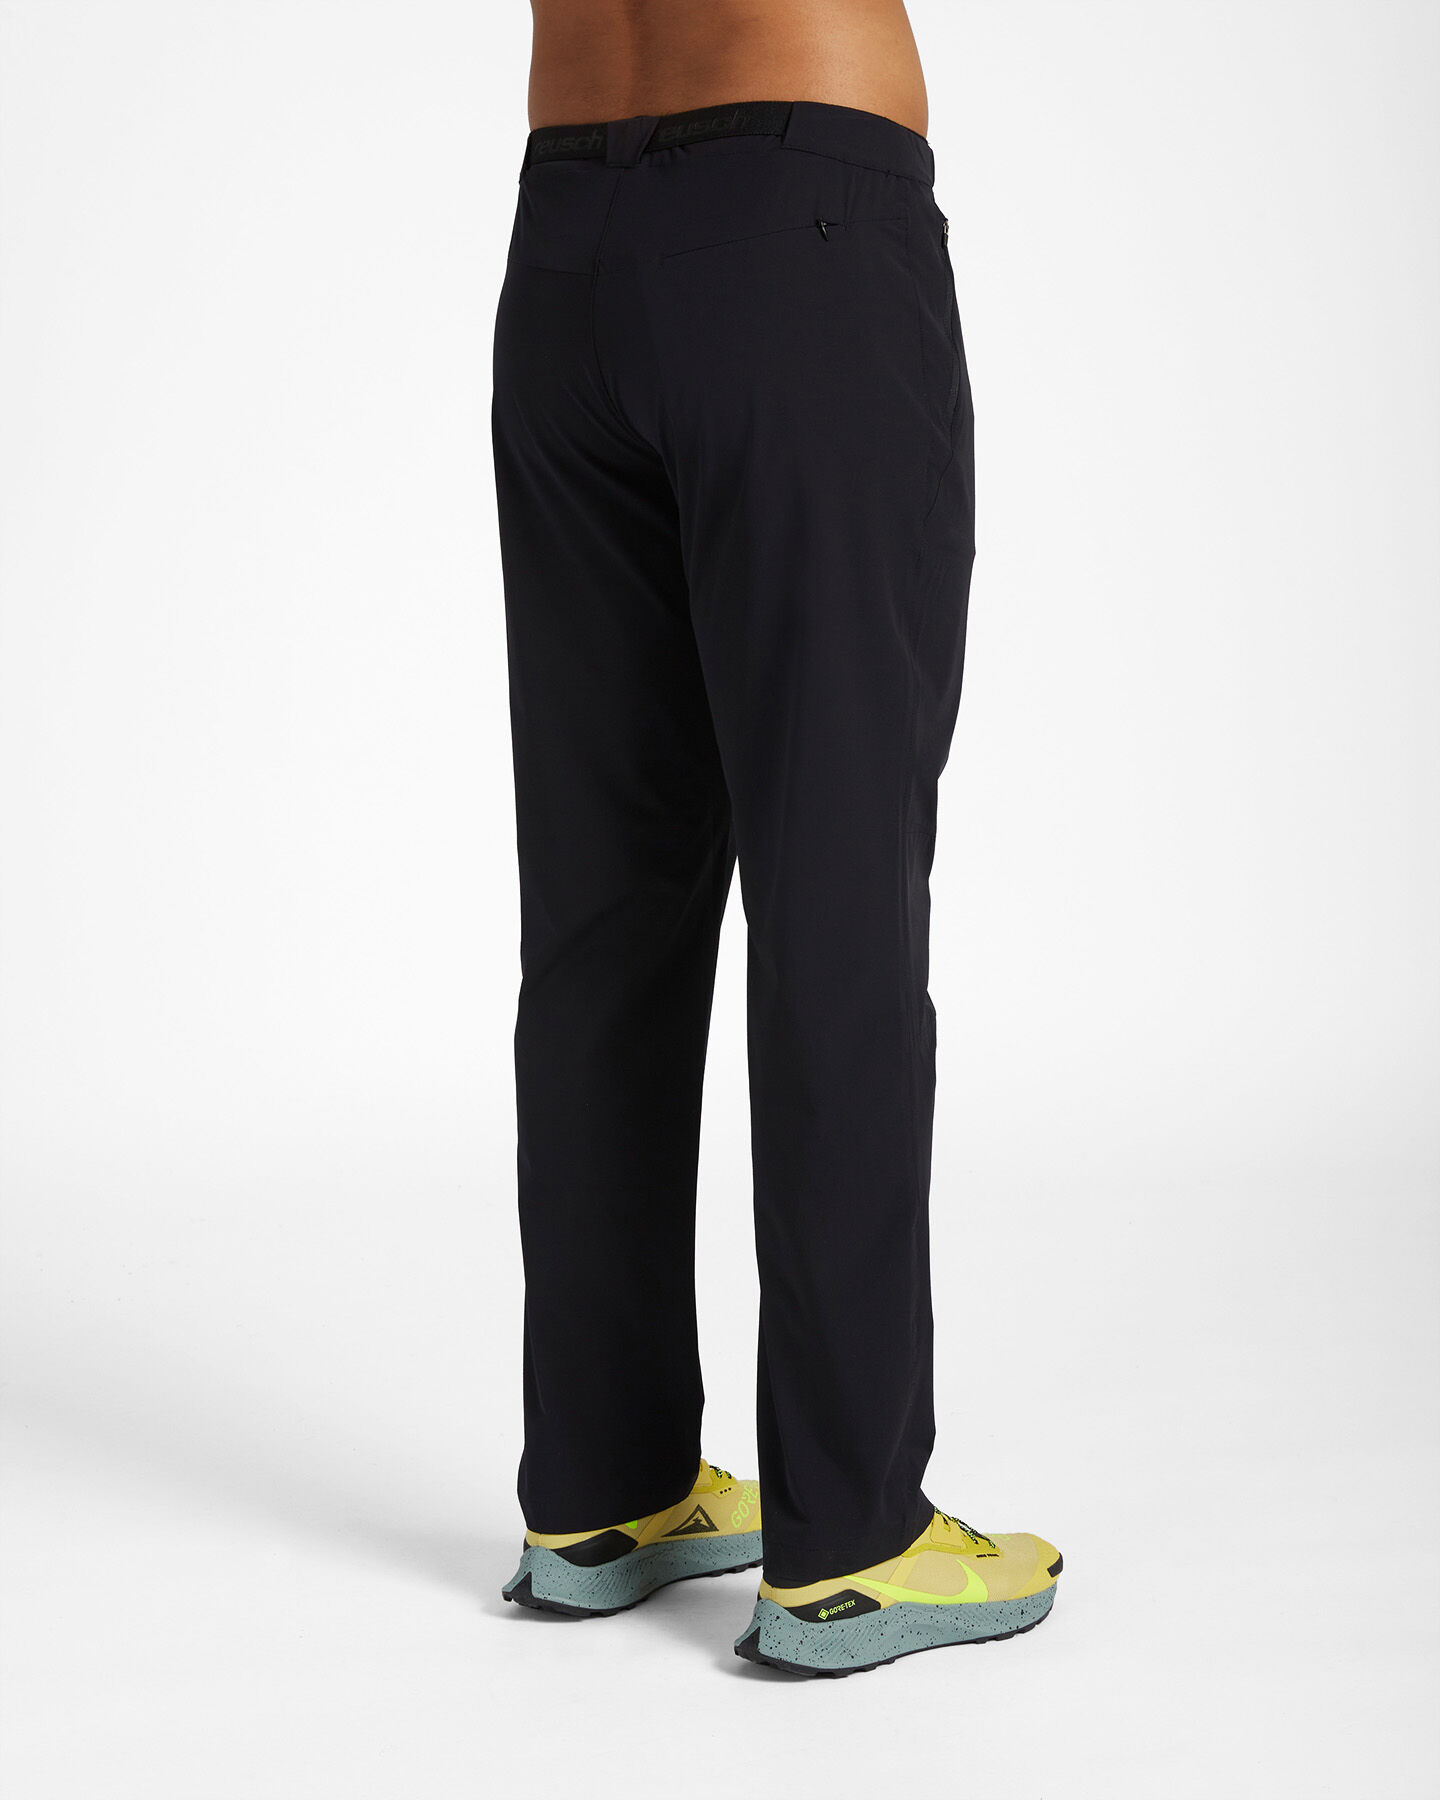  Pantalone outdoor REUSCH SUPER COMFORT M S4102781|995|M scatto 1